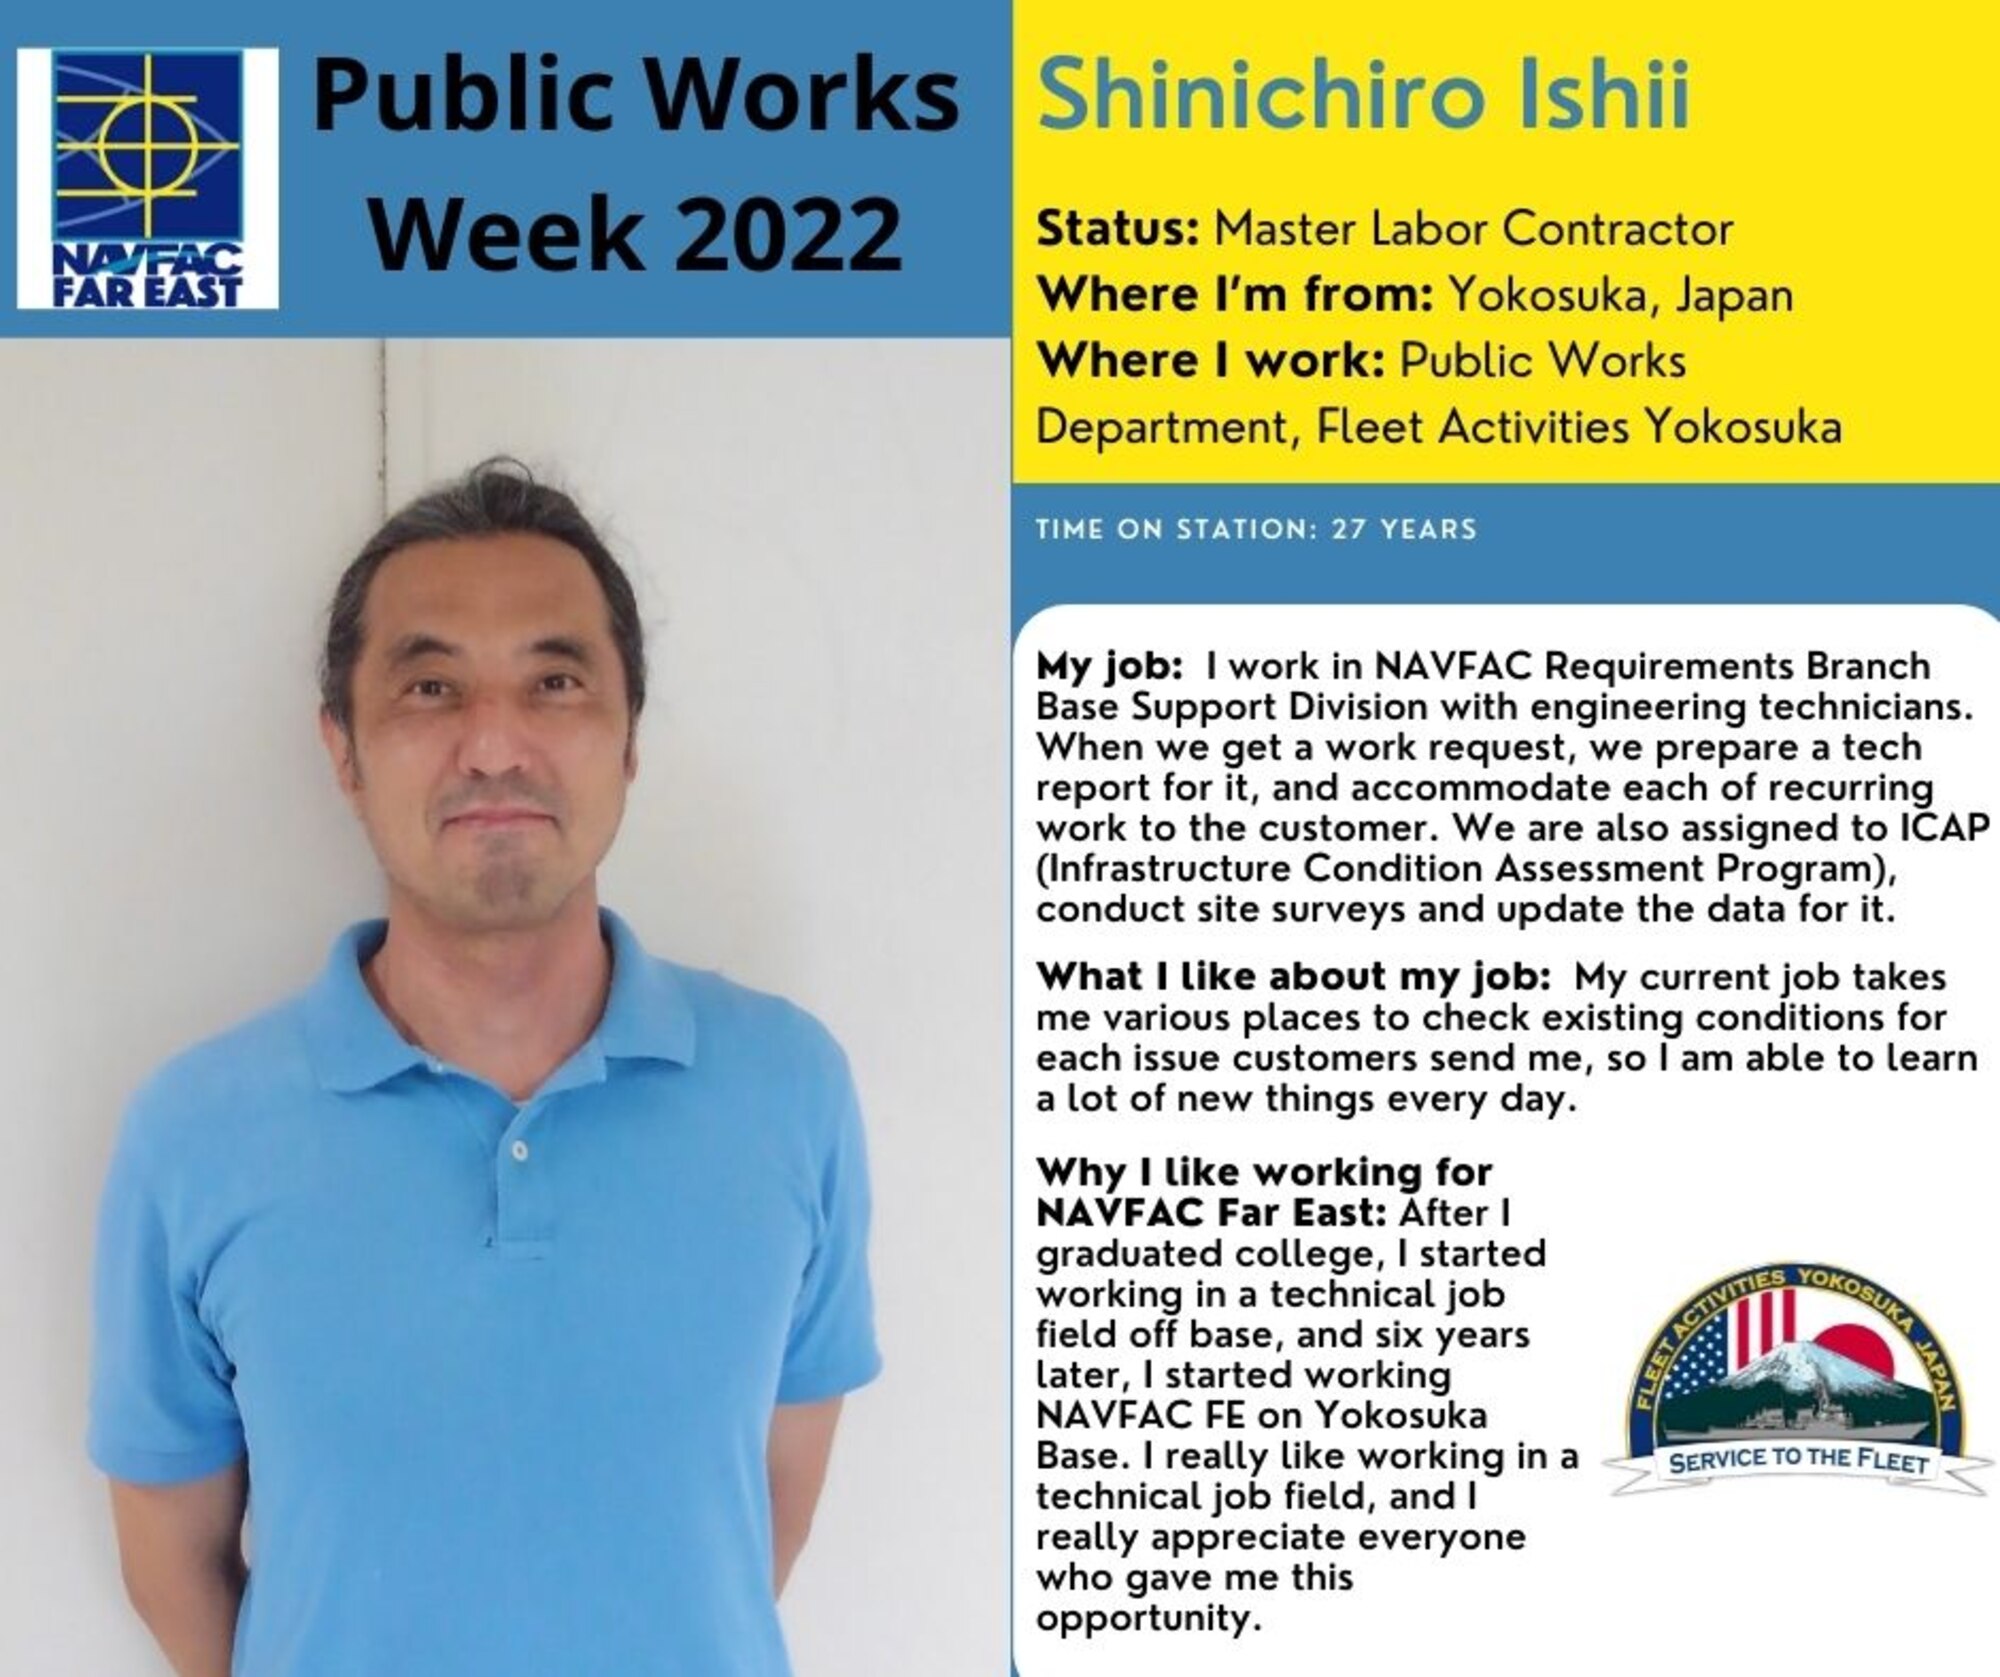 Public Works Week 2022: Shinichiro Ishii